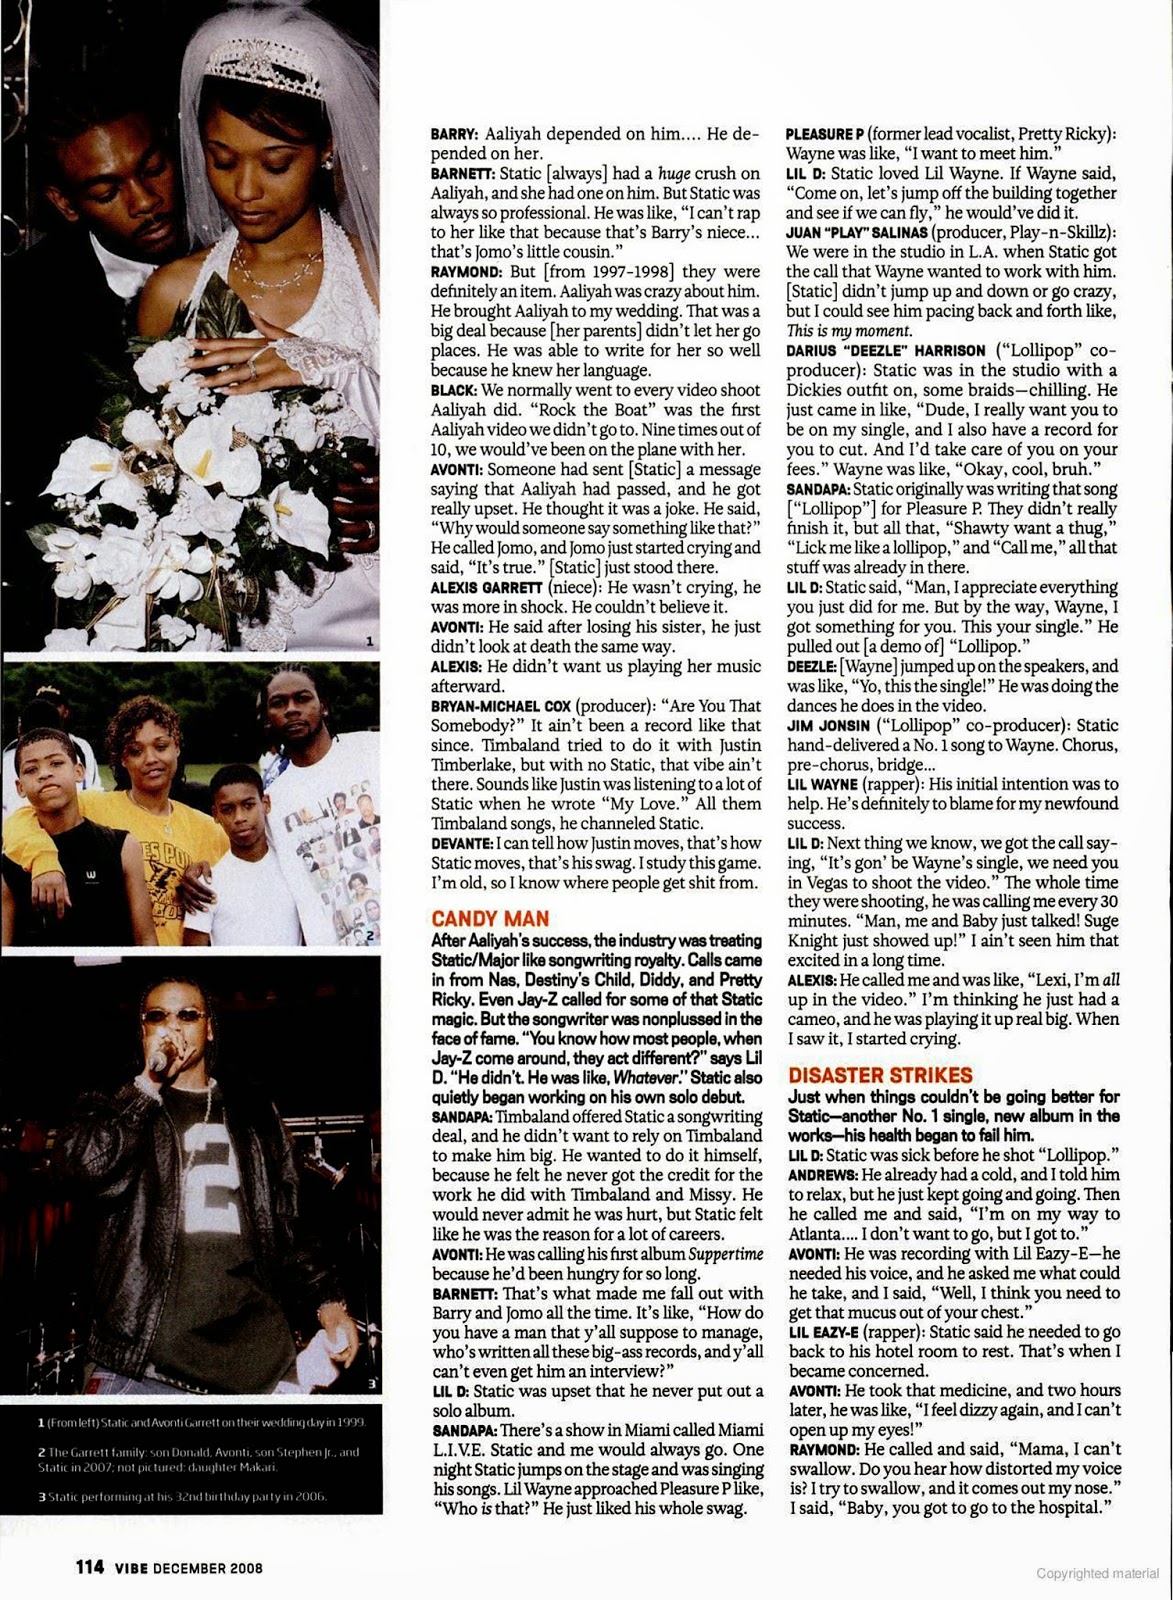 Aaliyah Archives: Aaliyah: Vibe Magazine, December 20081173 x 1600